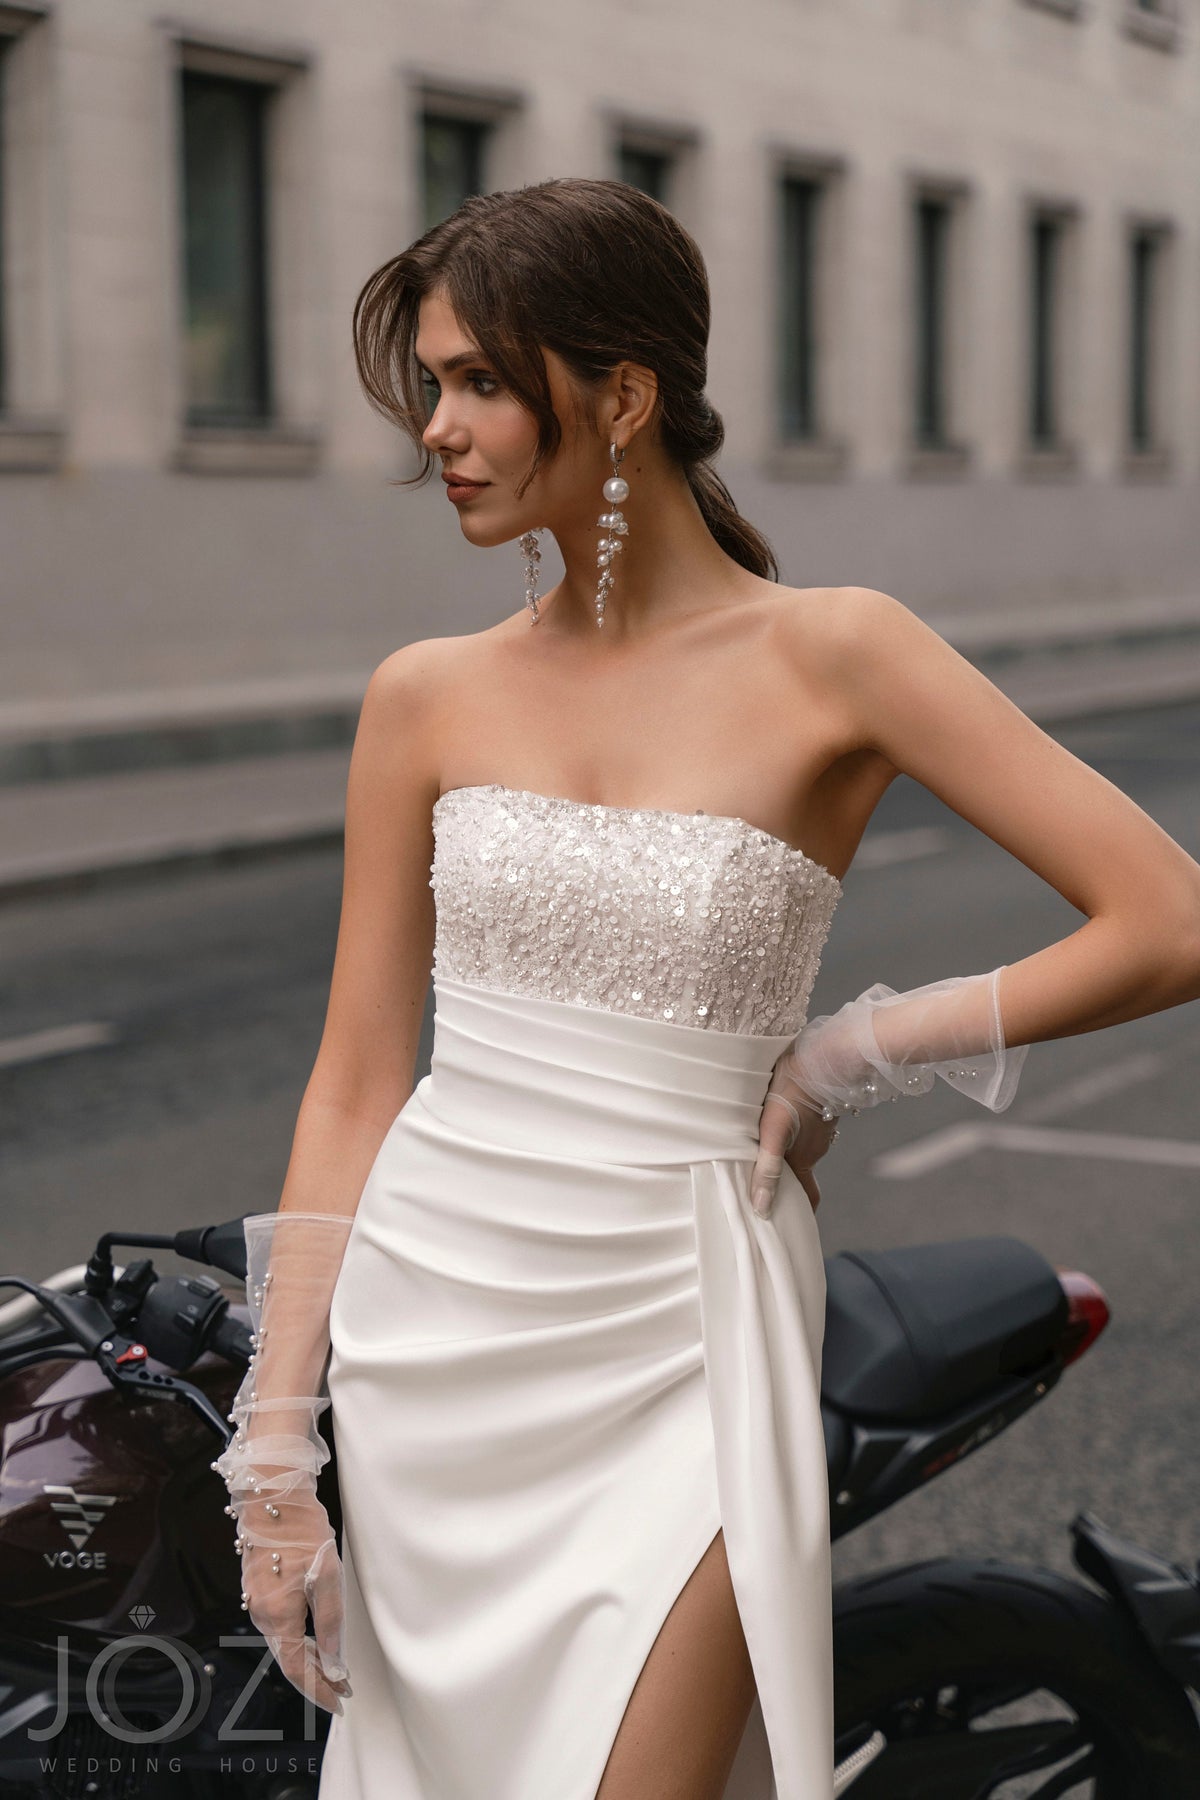 Classic Sleeveless Strapless Straight Neckline Open Back Wedding Dress Bridal Gown Gathered Side Slit Pleated Design Minimalist